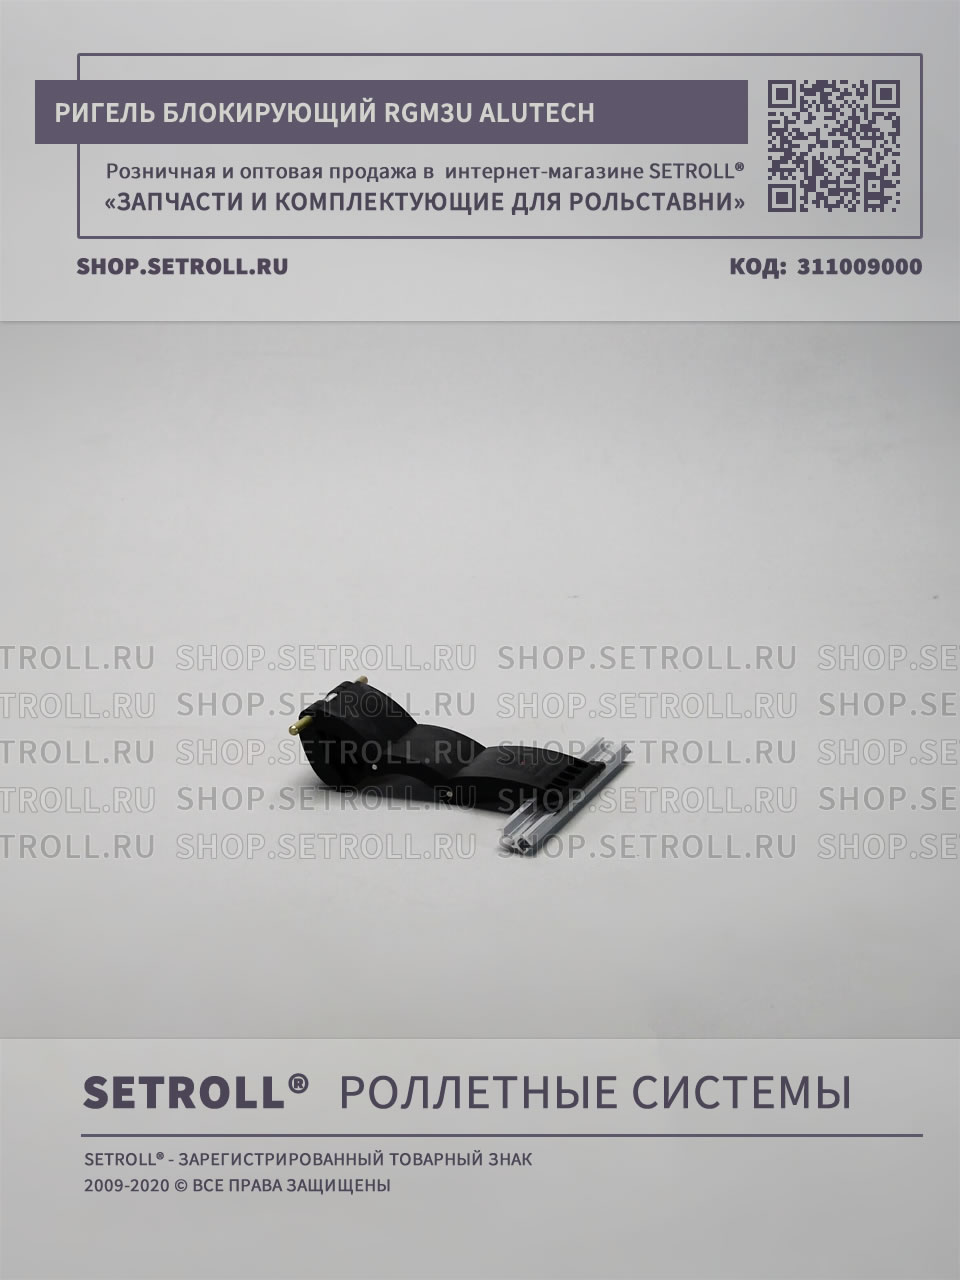 rgm3u-alutekh-01-shop.setroll.ru